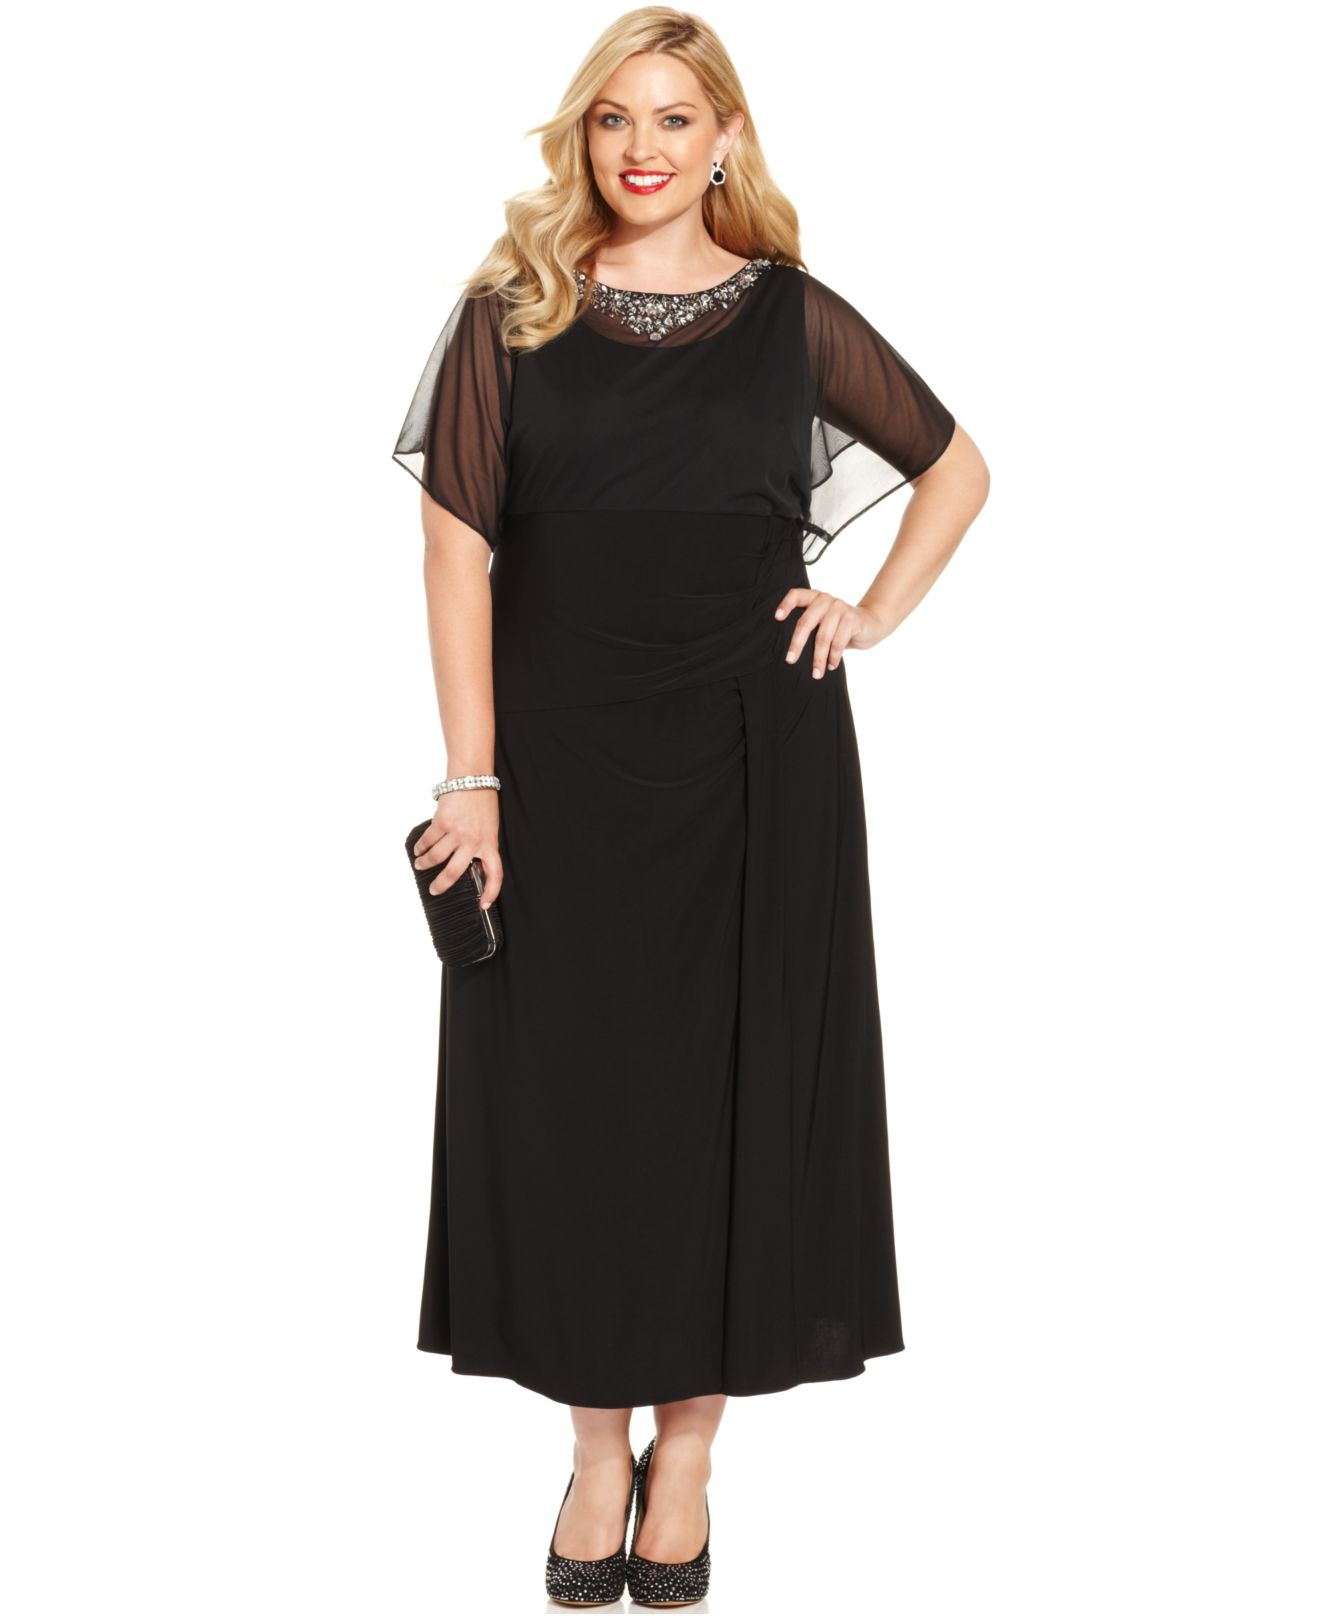 Lyst - Alex Evenings Plus Size Flutter-Sleeve Embellished Dress in Black